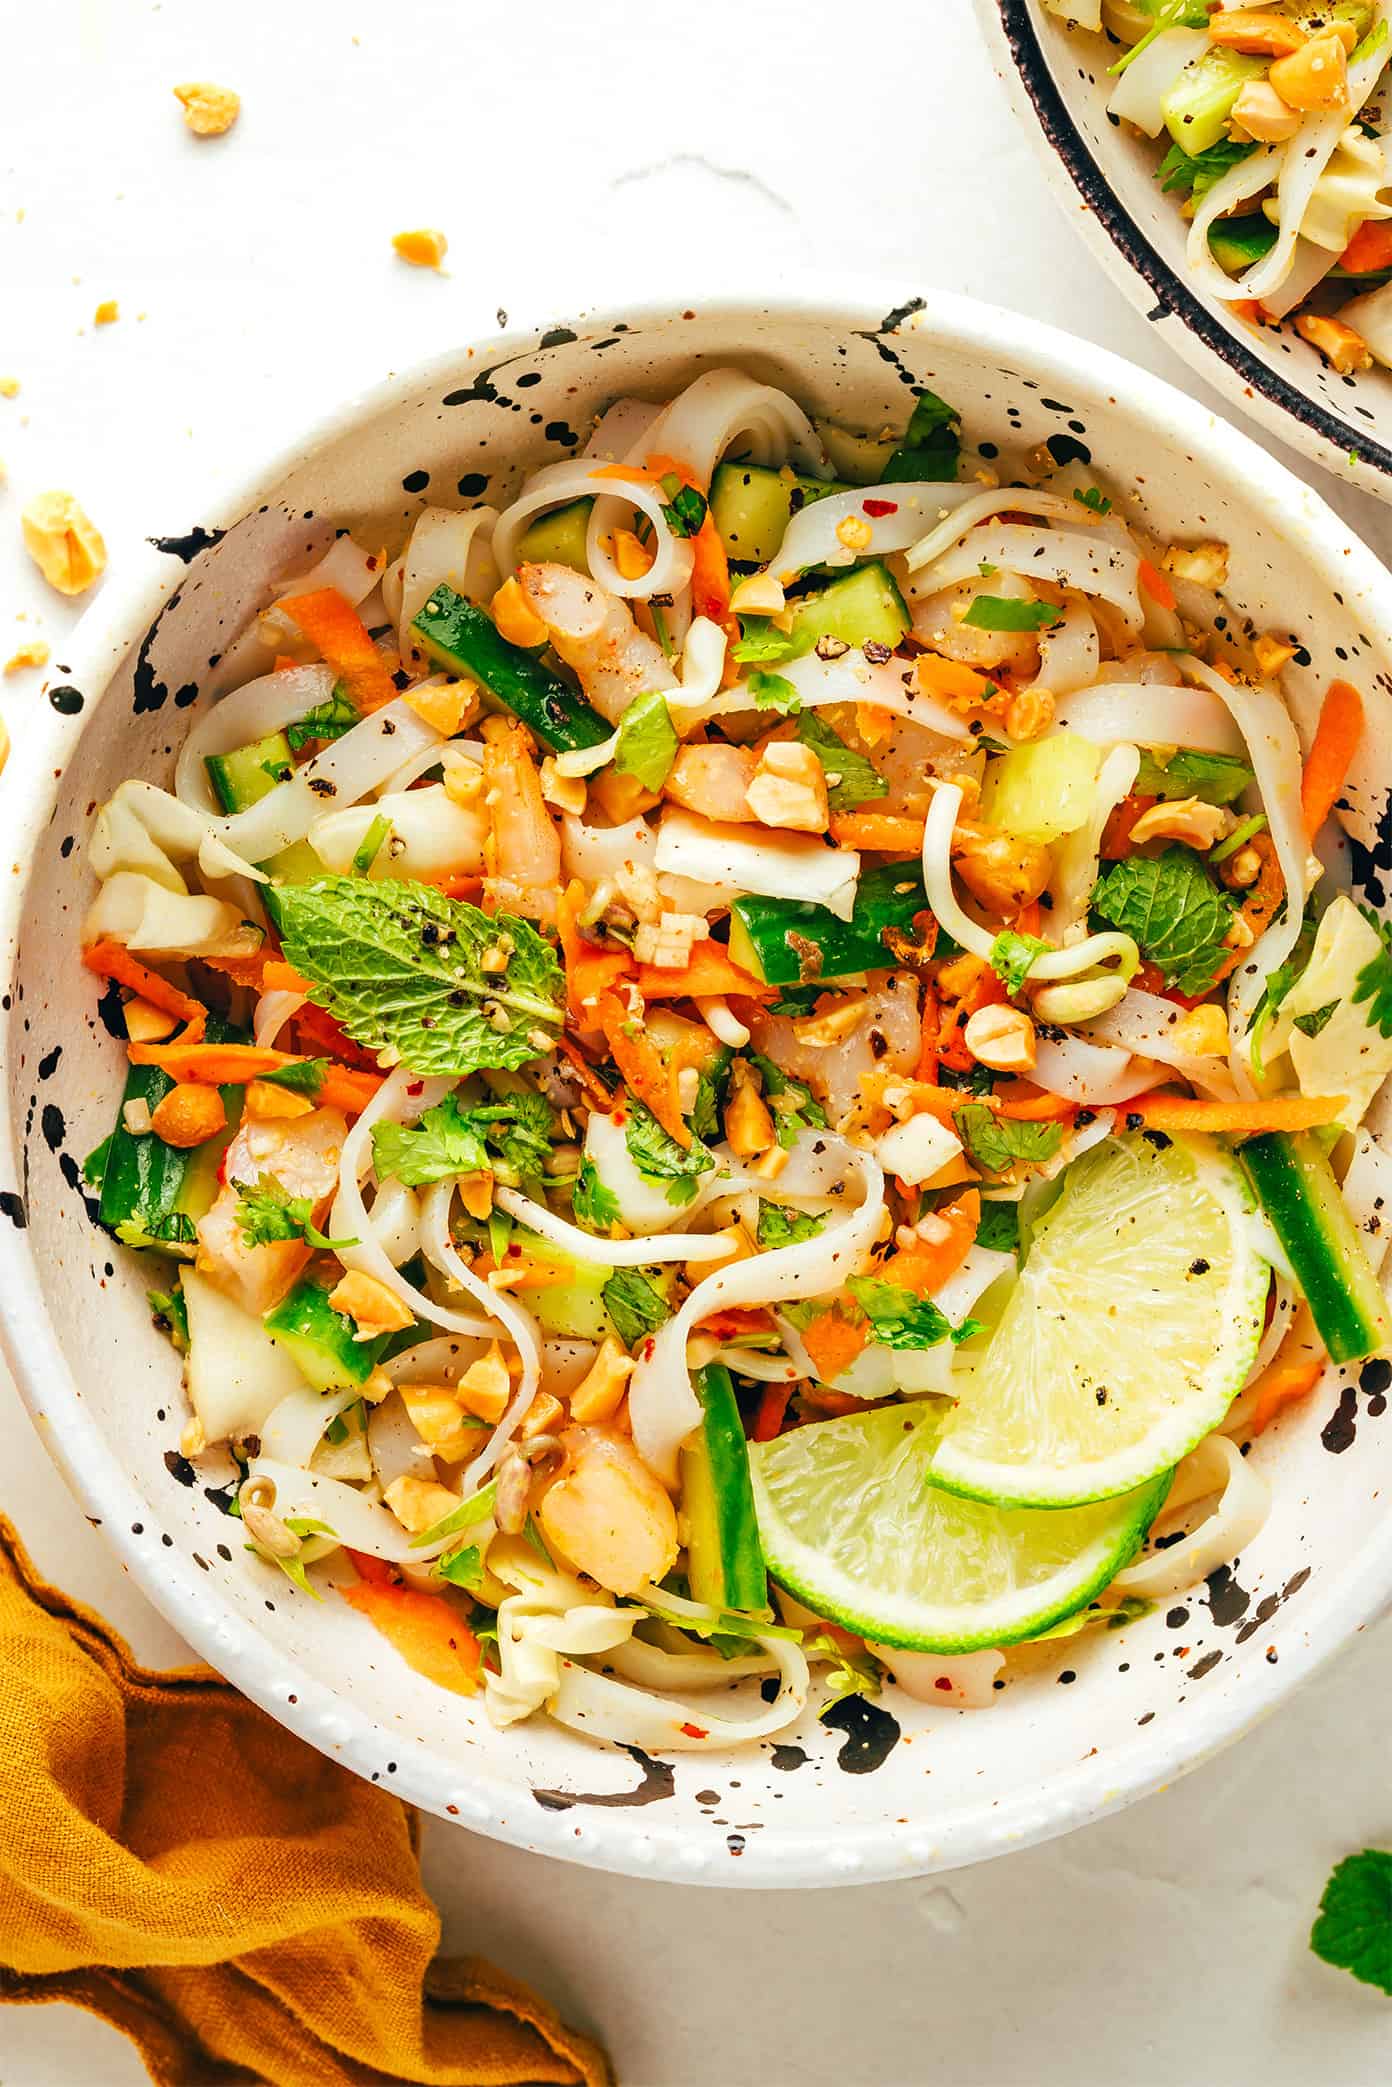 https://www.gimmesomeoven.com/wp-content/uploads/2018/03/Vietnamese-Spring-Roll-Salad-7.jpg